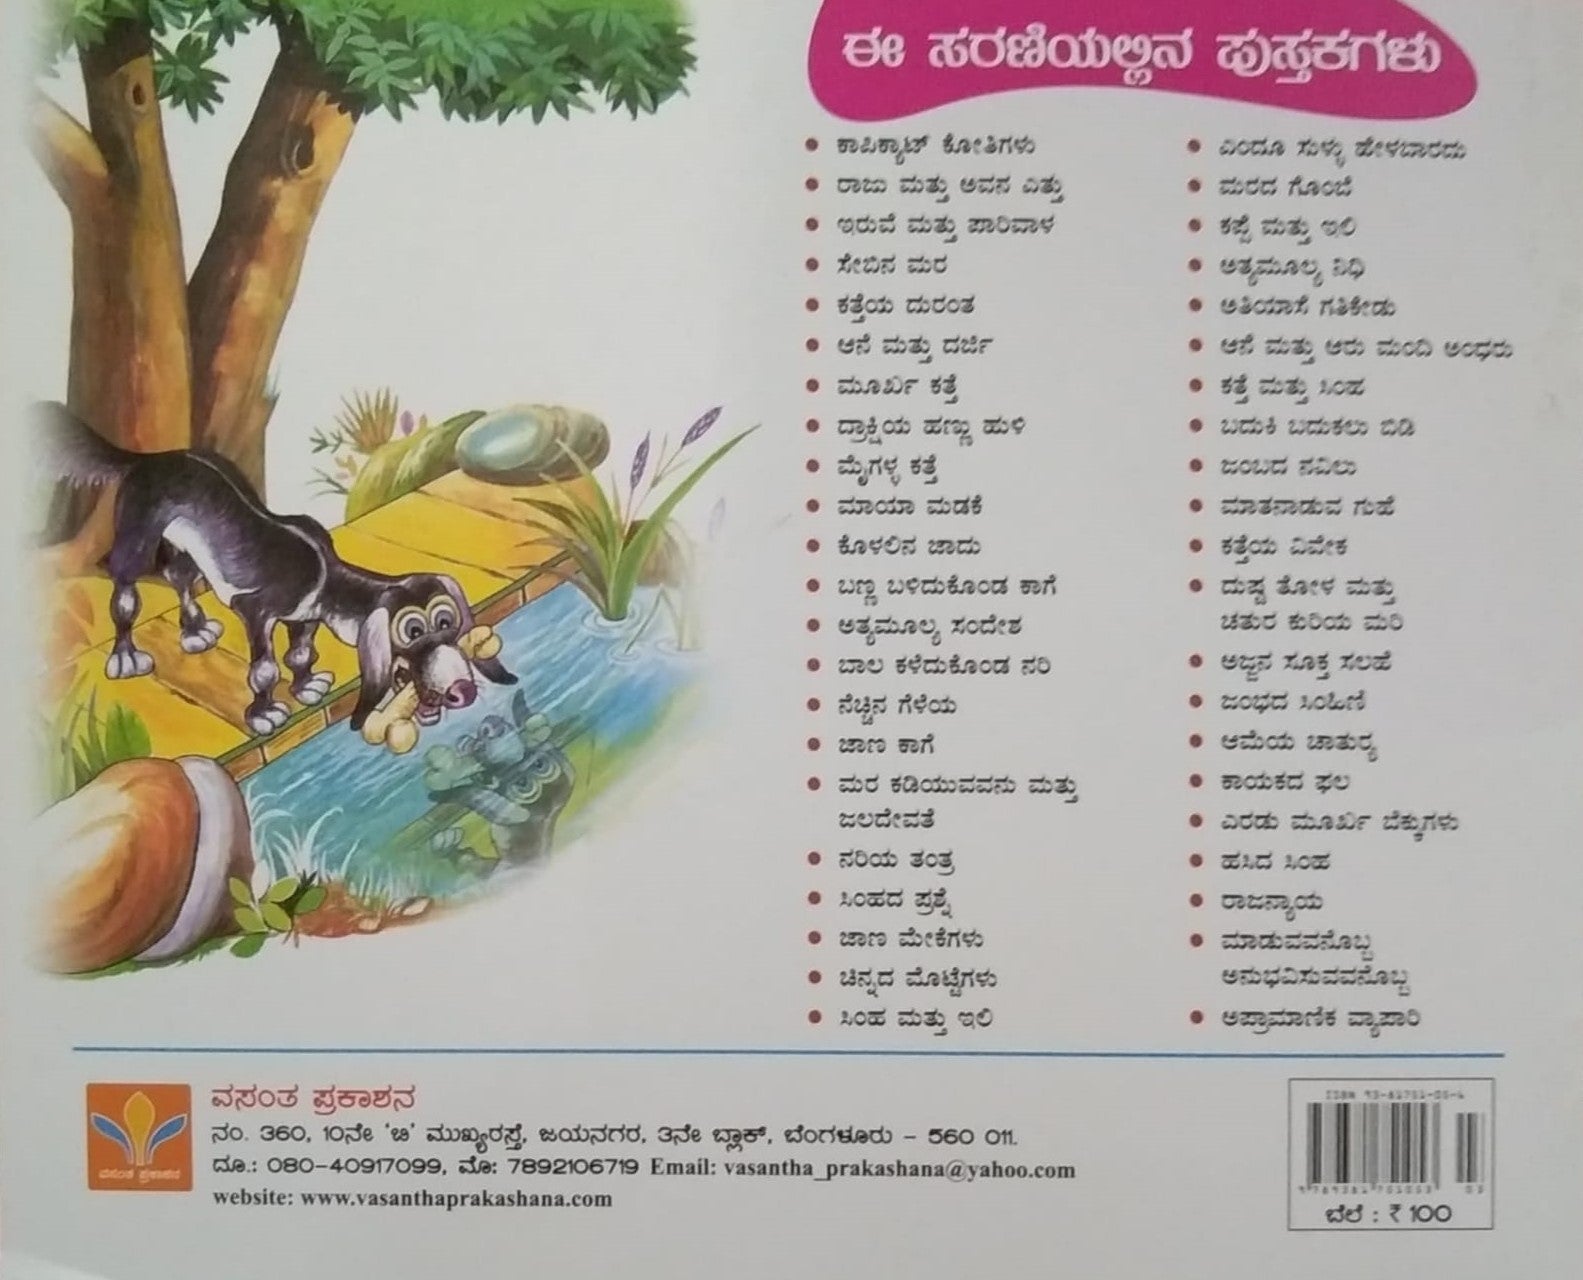 Copycat Kotigalu is a book of Children's Stories which is written by S. Pattabhirama and Published by Vasantha Prakashana